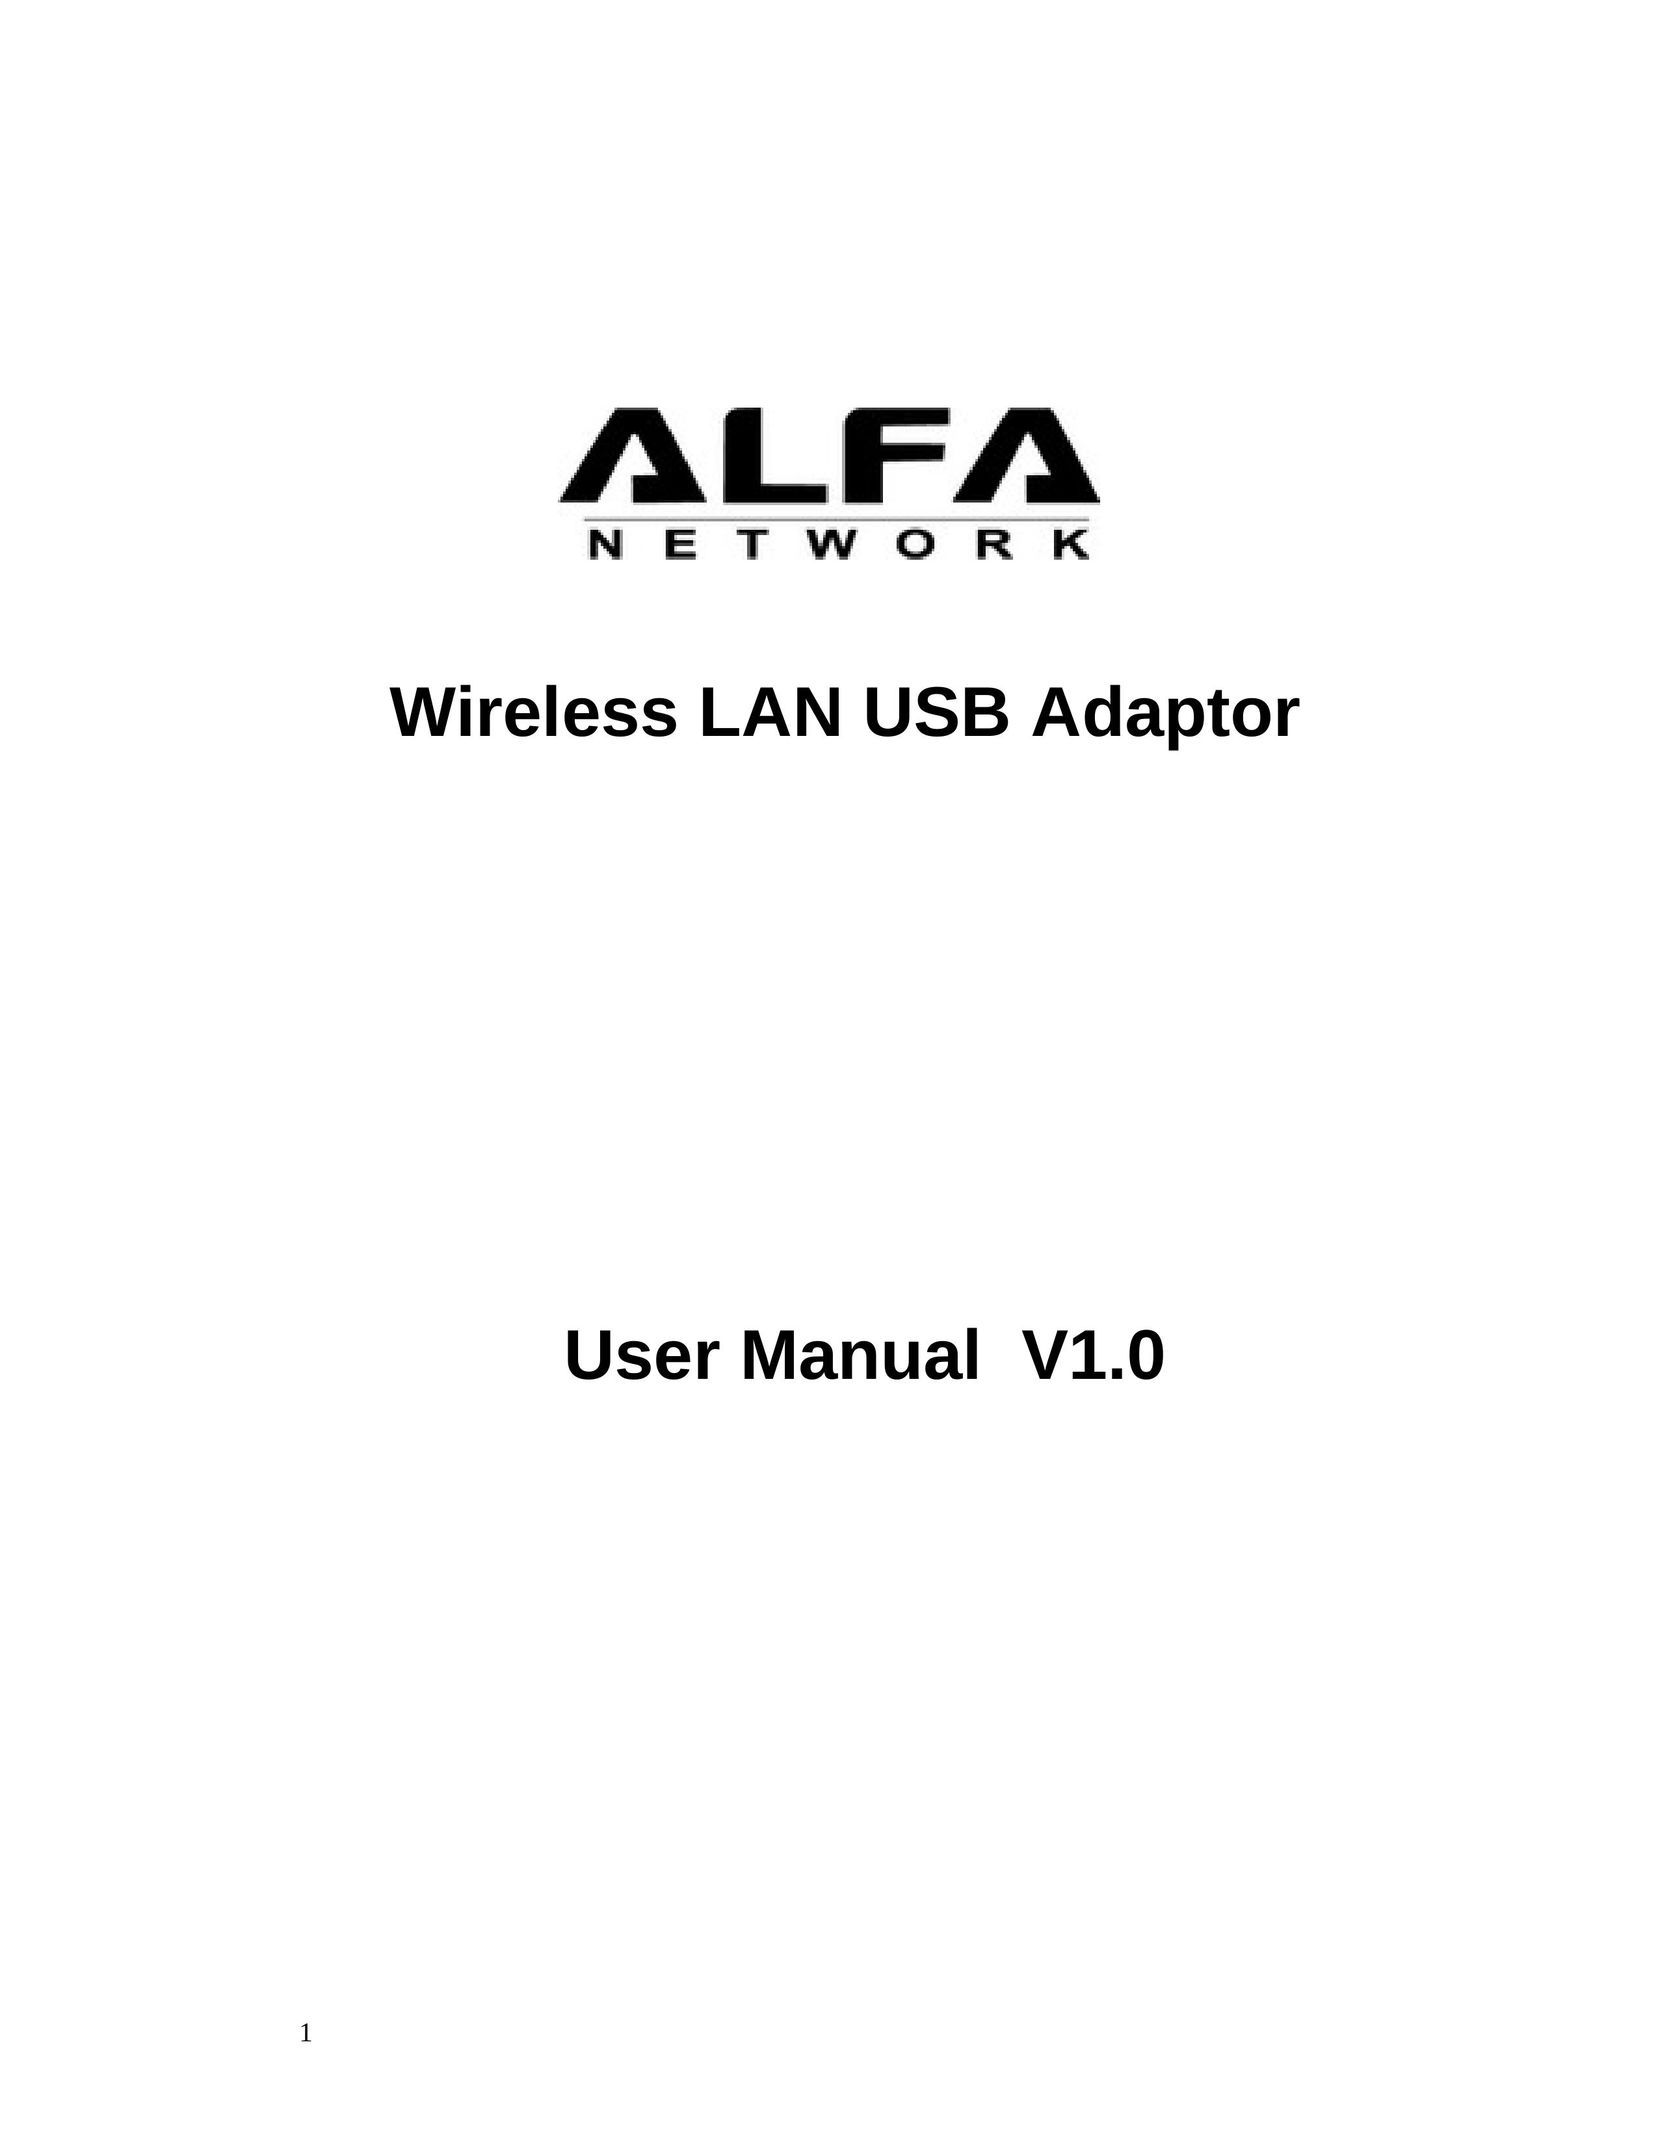 ALFA Wireless LAN USB Adaptor Network Card User Manual